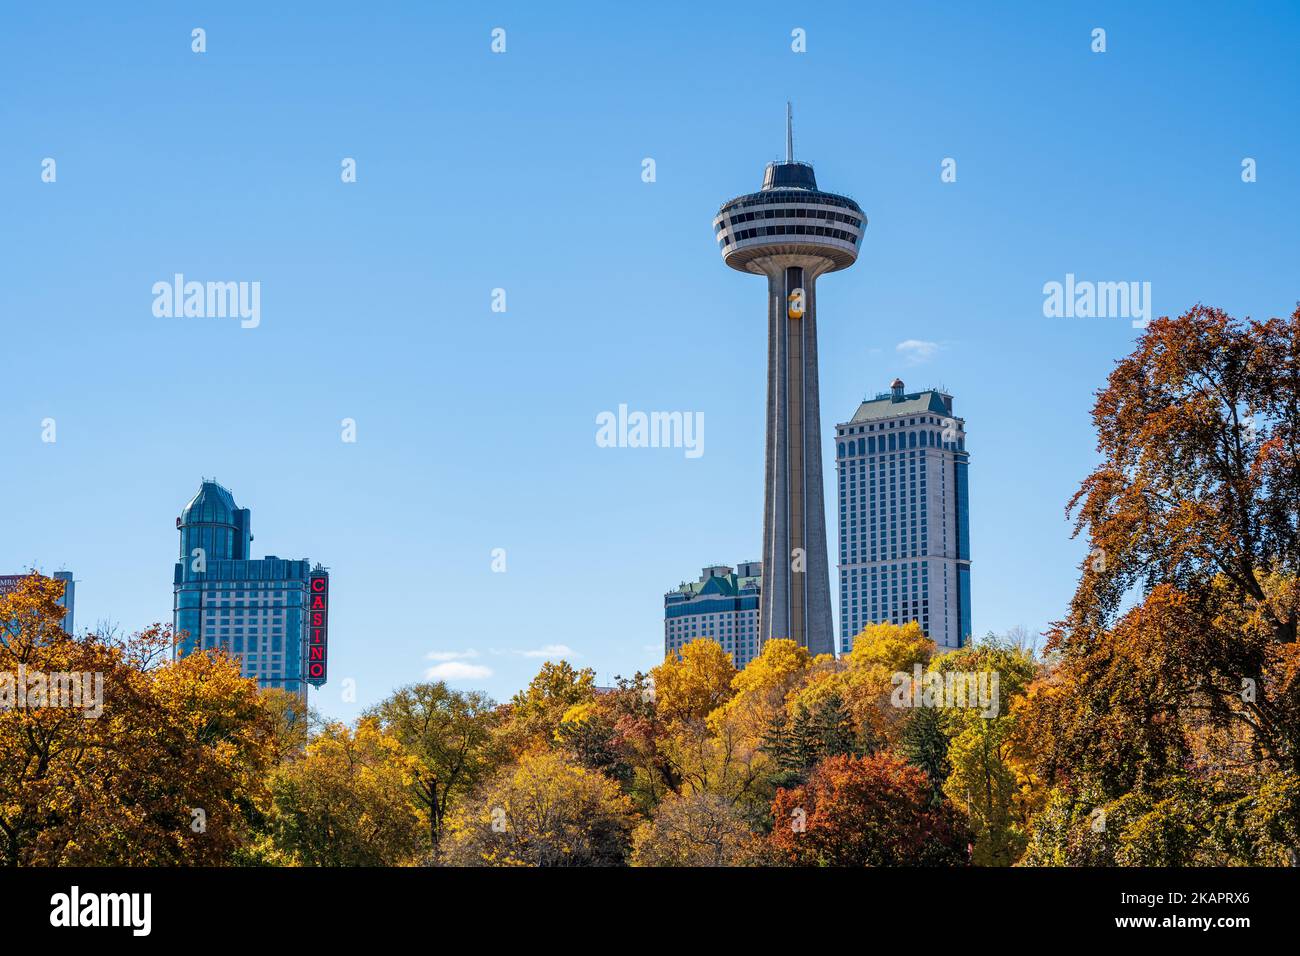 Cascate del Niagara, Ontario, Canada - Ottobre. Skylon Tower, autunno acero foglie sul cielo blu. Fogliame autunnale a Niagara Falls City. Foto Stock